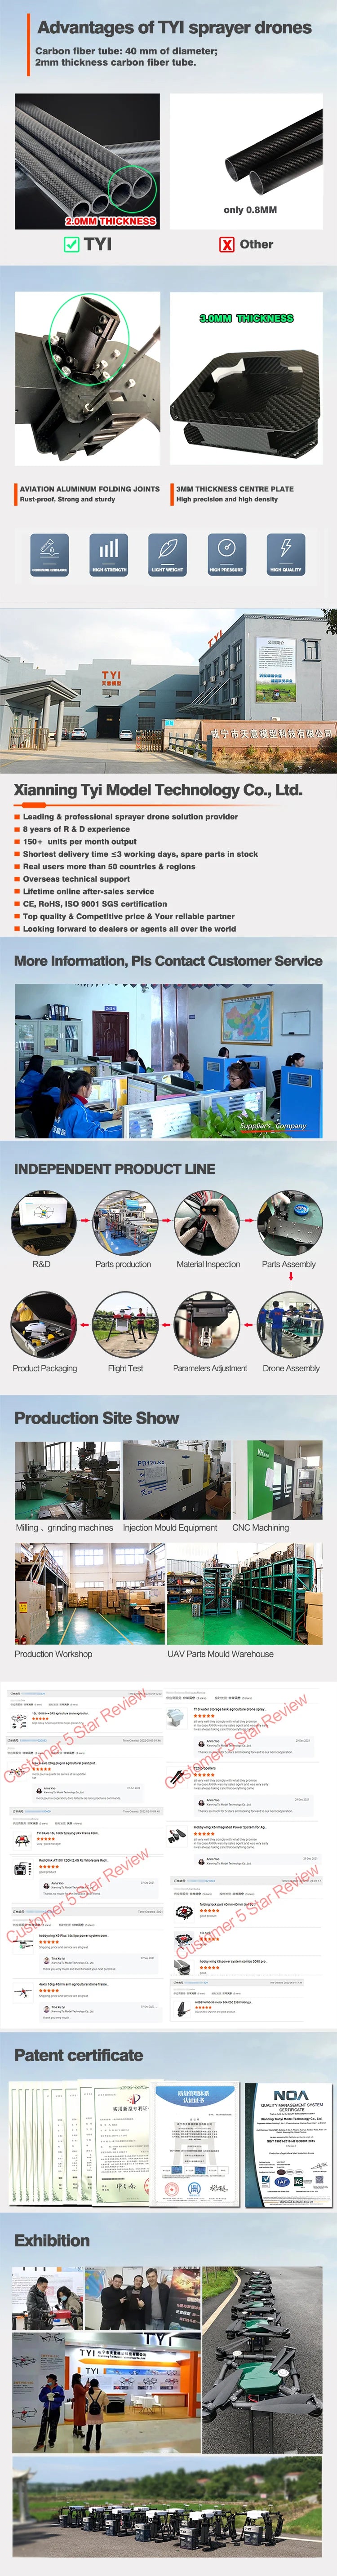 TYI 30L Fire Fighting Drone, Xianning Tyi Model Technology Co Ltd: Leading professional sprayer drone solution provider